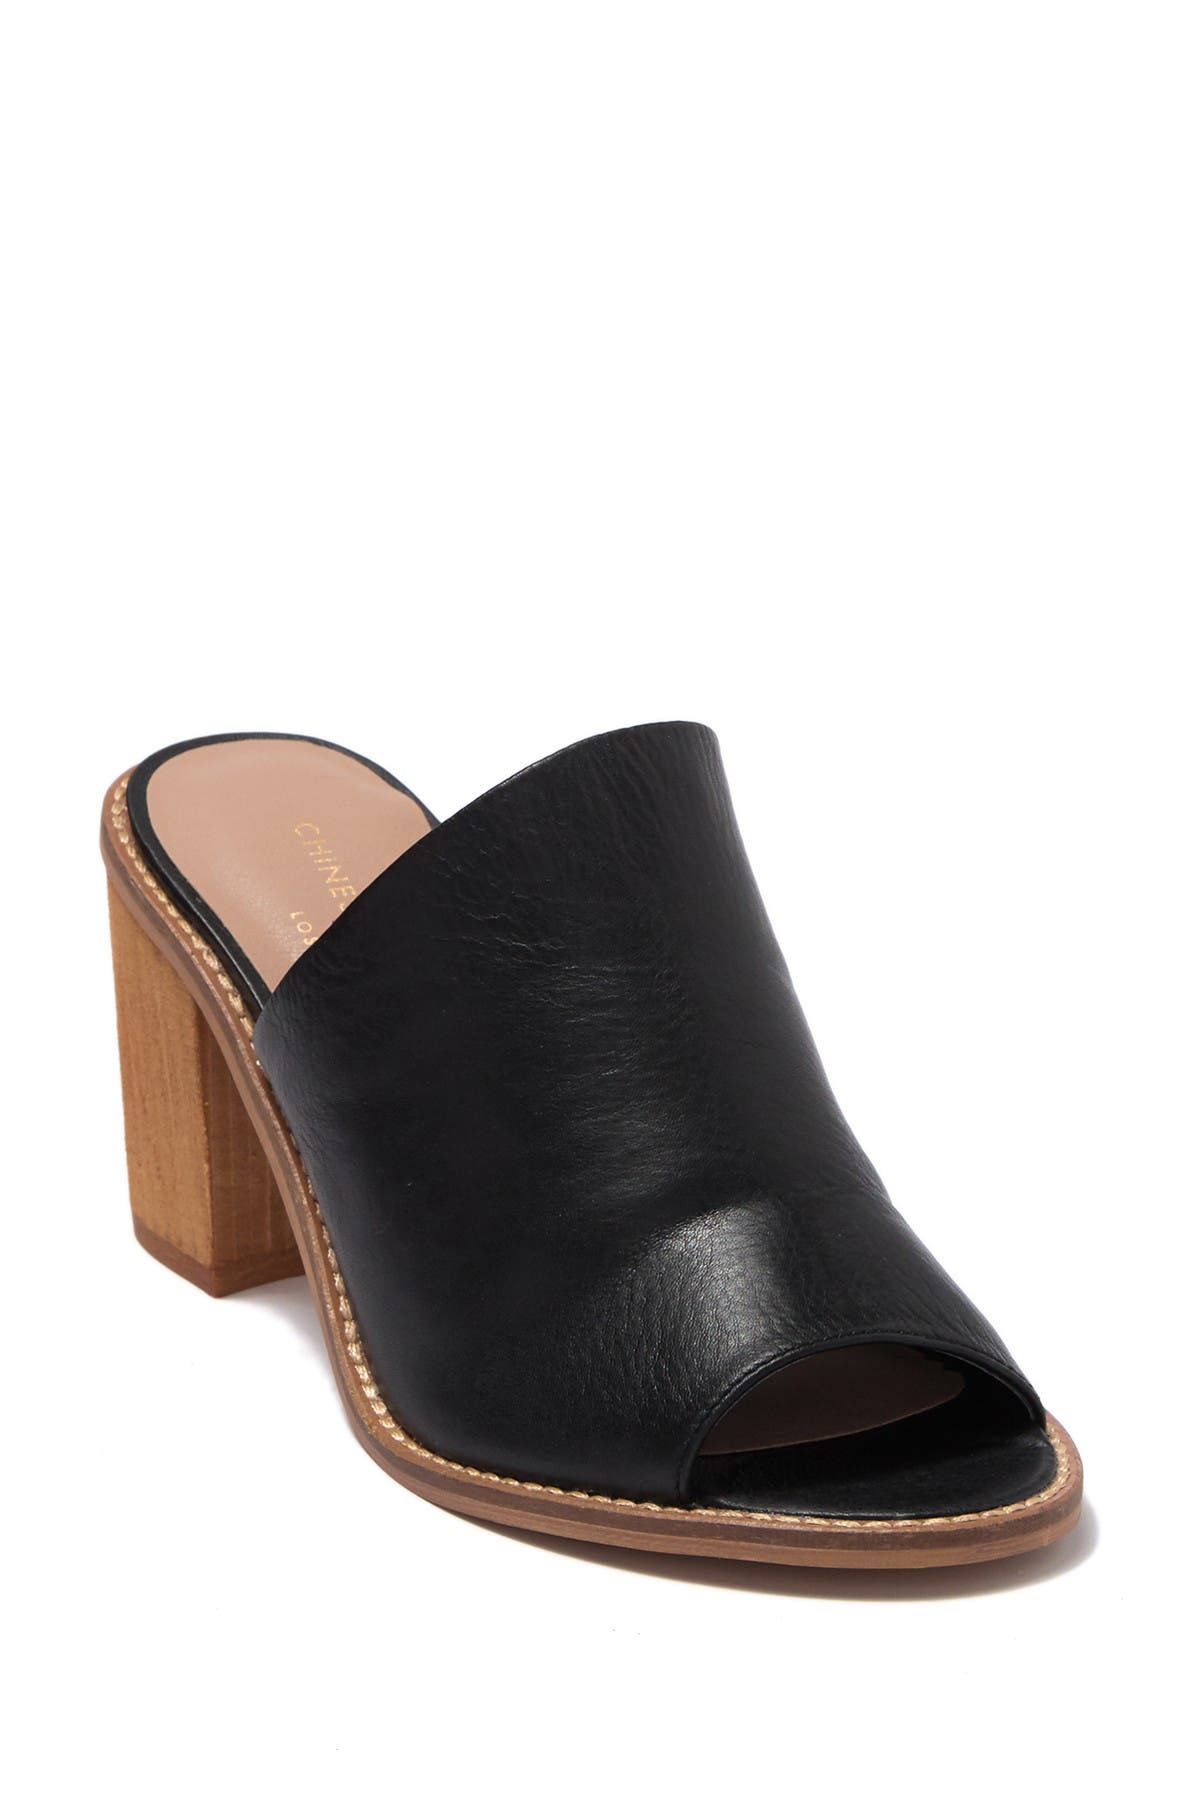 leather block heel mules